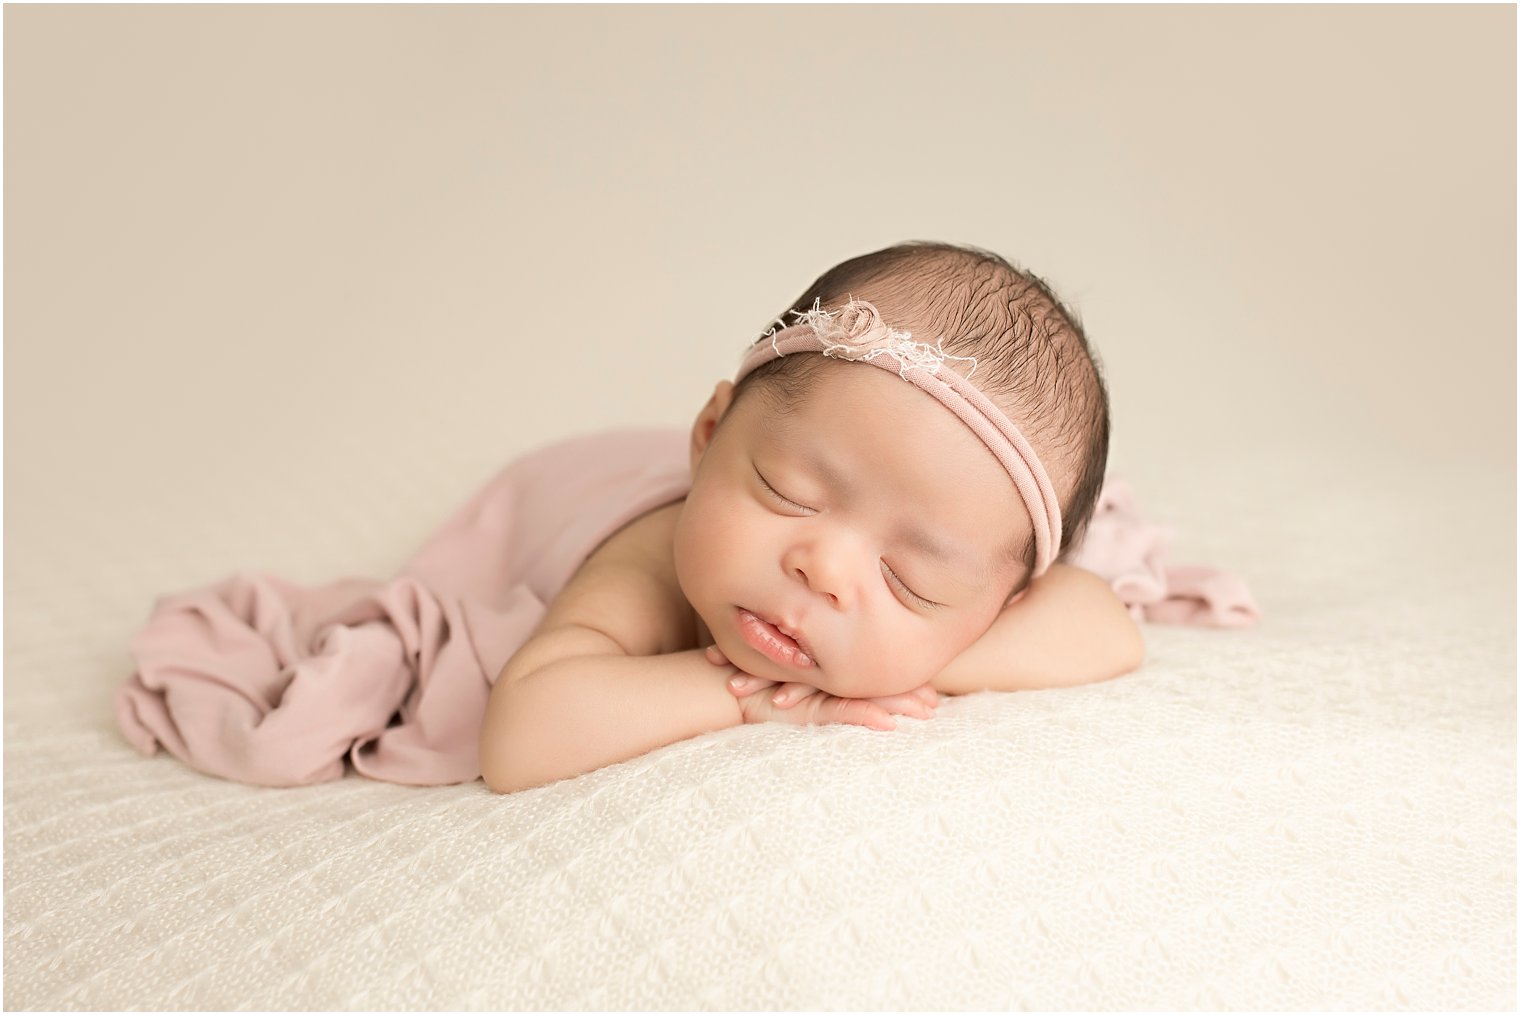 Newborn in chin on hands pose | Photo by Idalia Photography